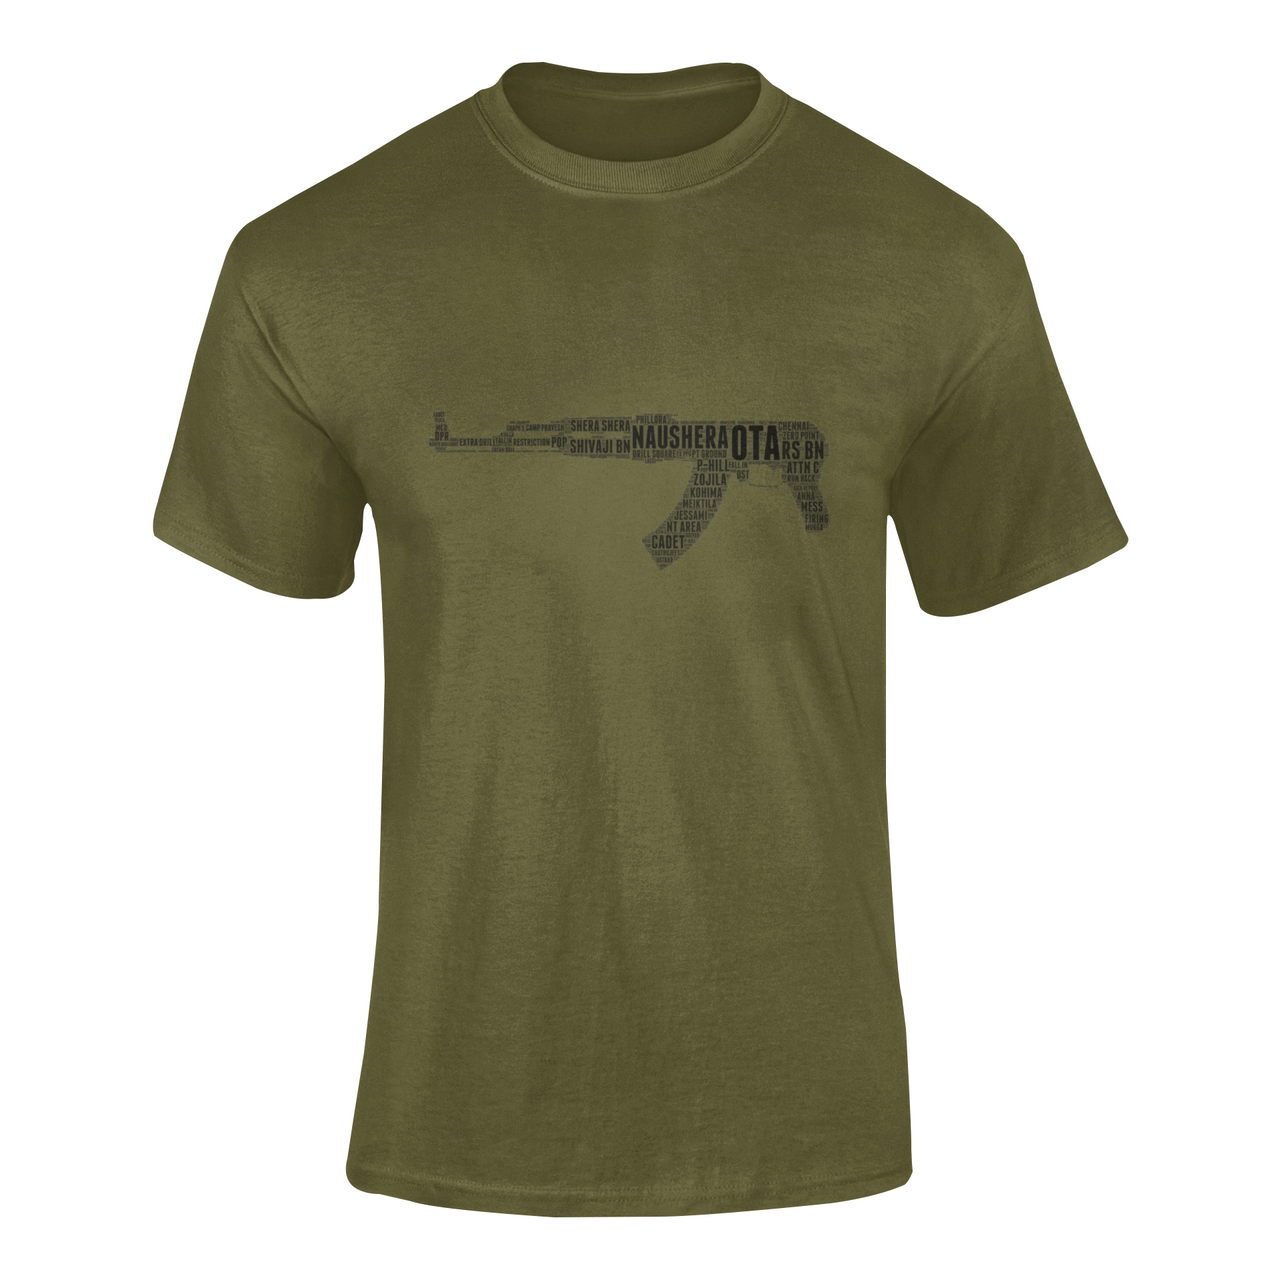 OTA T-shirt - Word Cloud Naushera - AK-47 Folding Stock (Men)